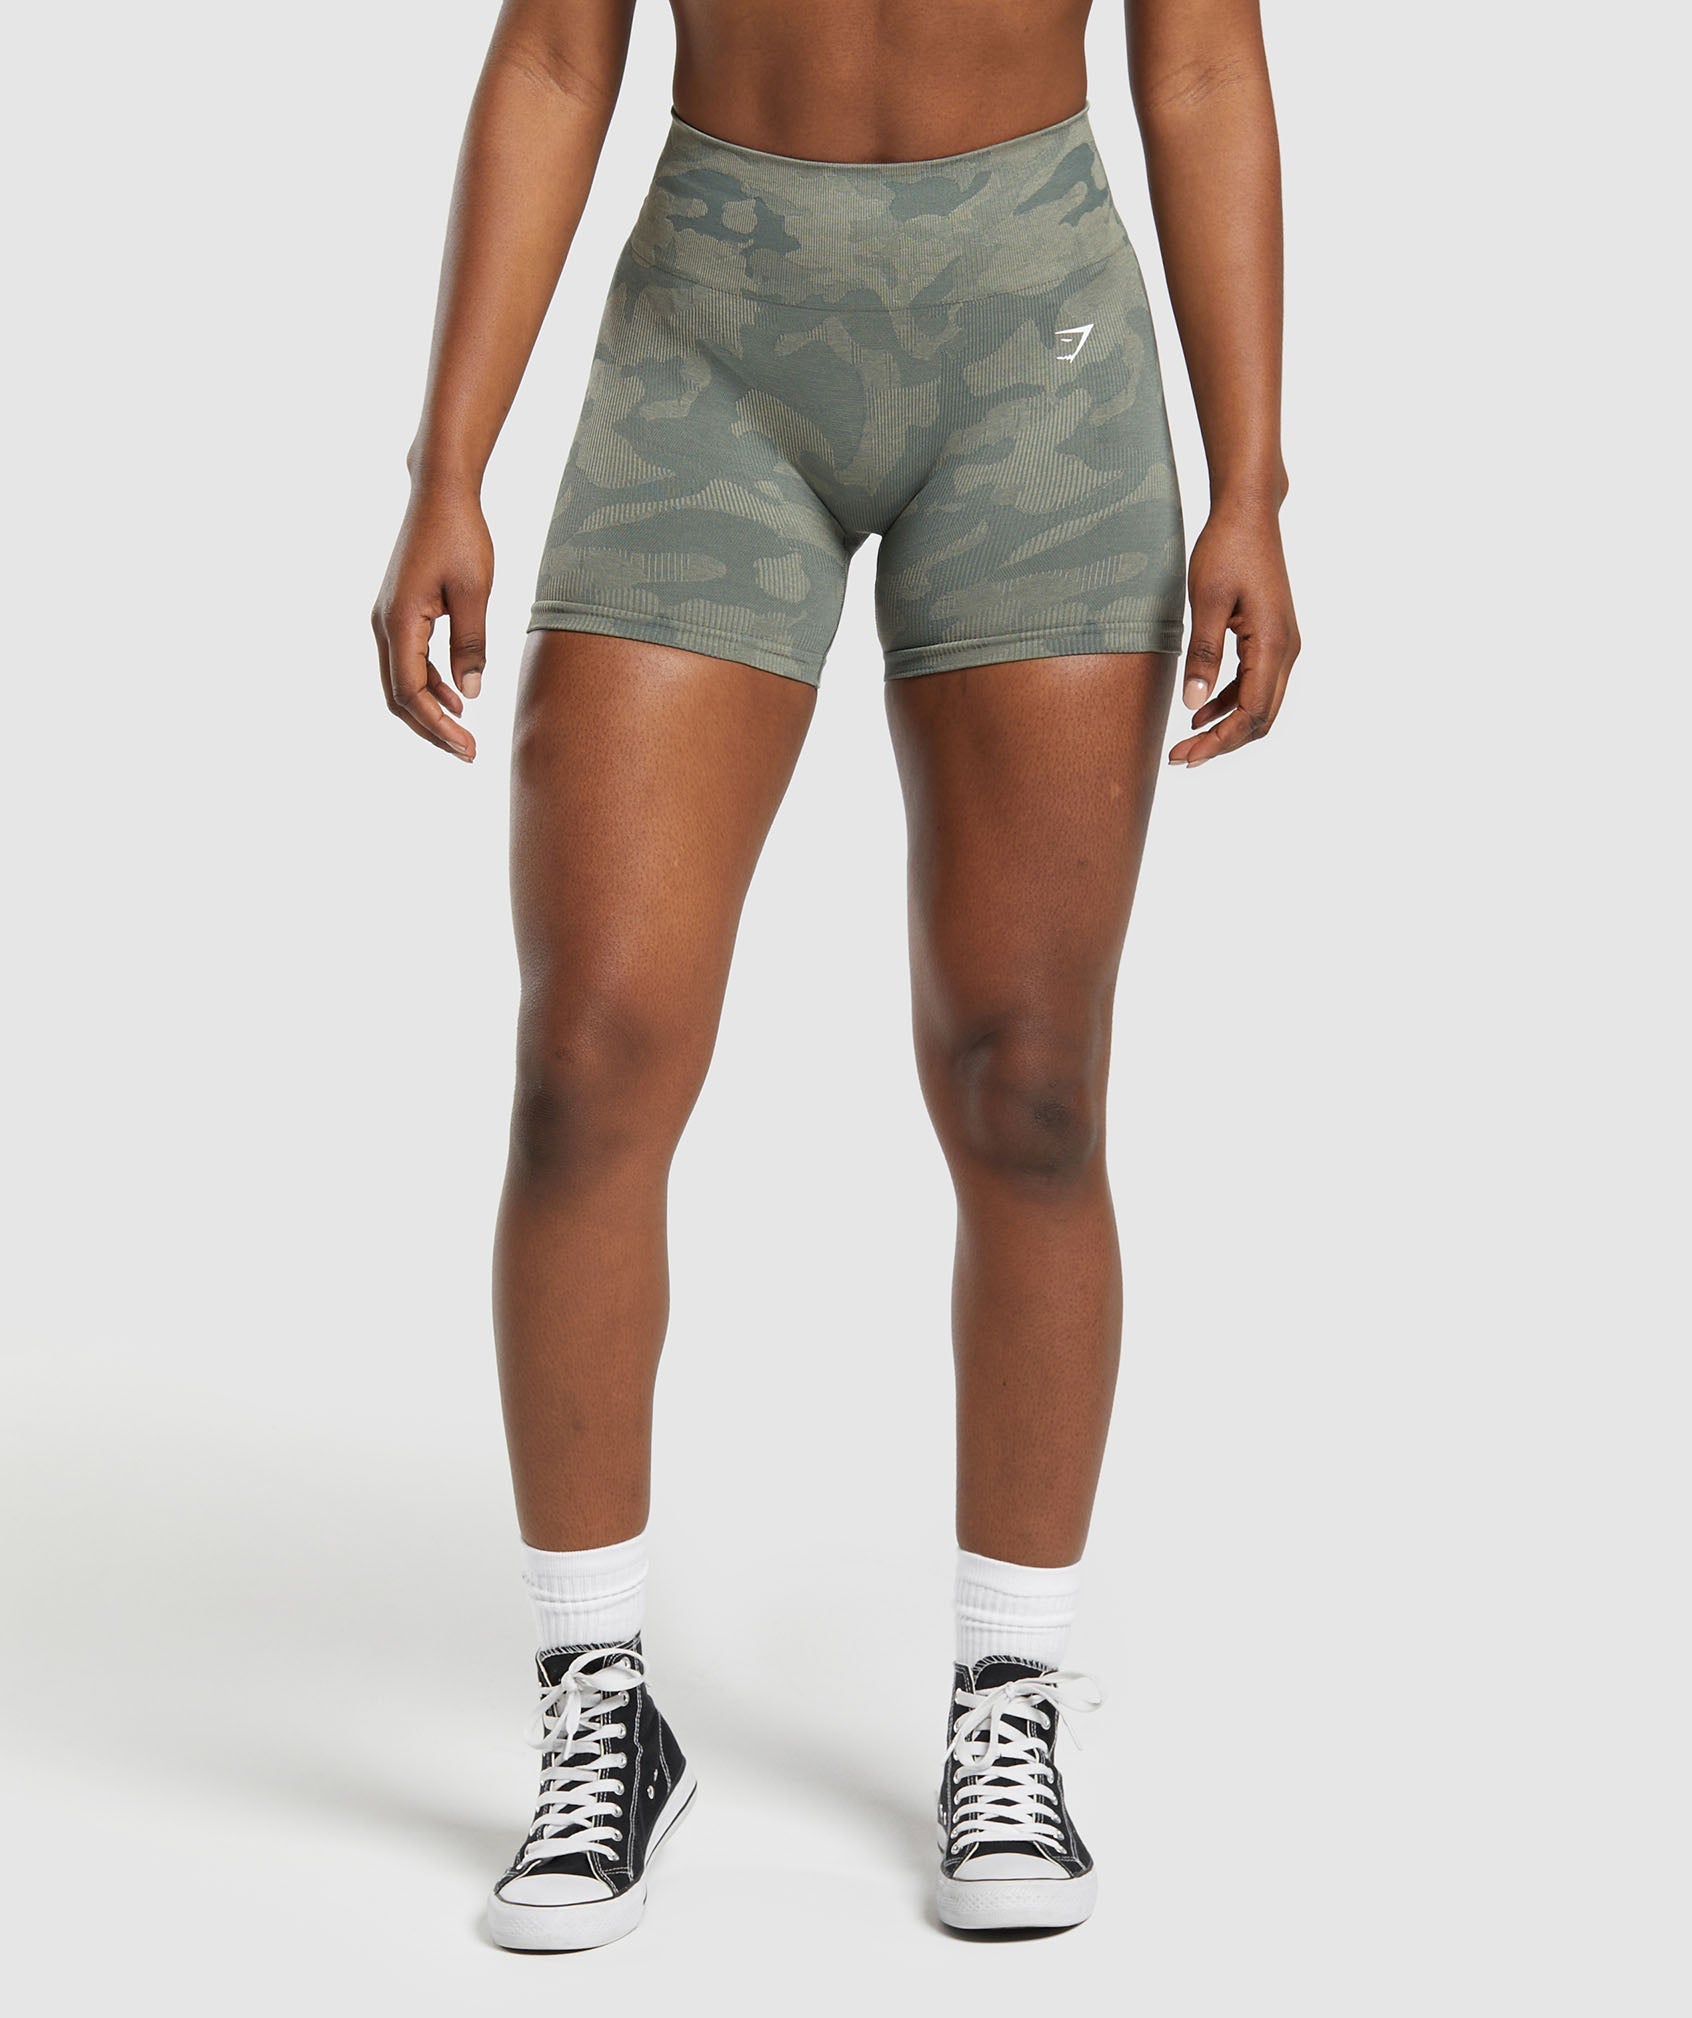 Adapt Camo Seamless Ribbed Shorts dans Unit Green/Chalk Greenest en rupture de stock